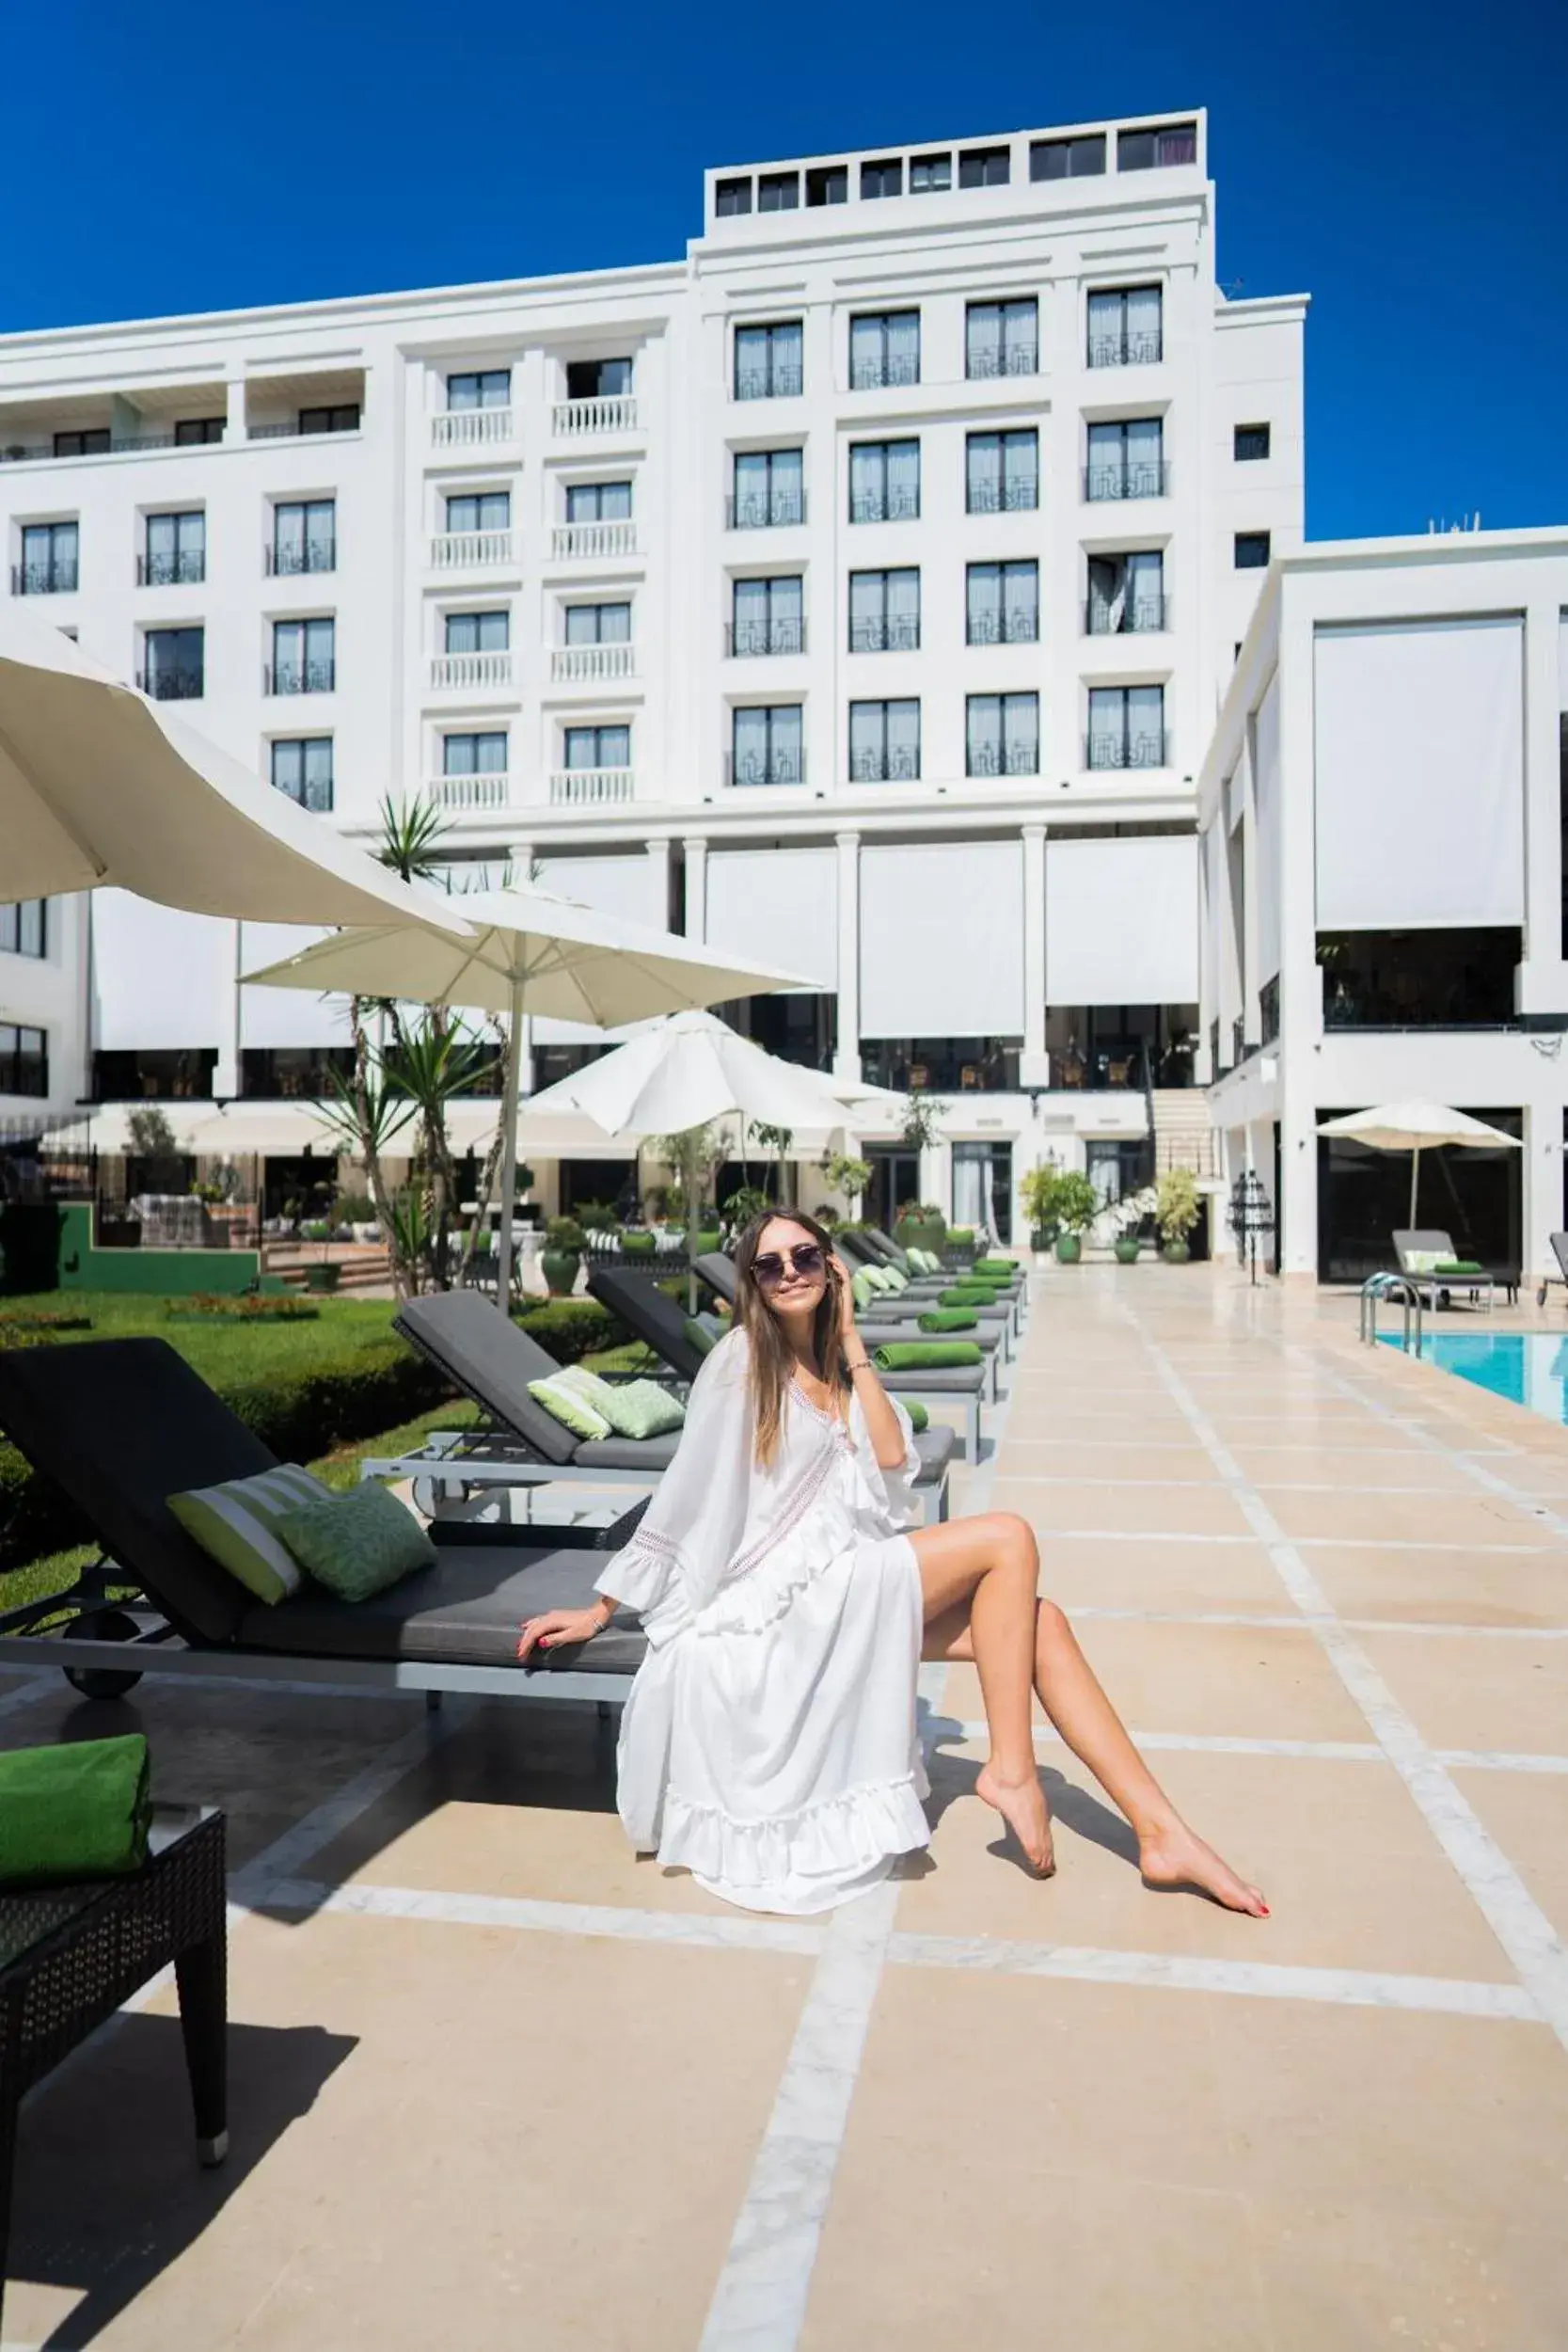 Swimming pool in Le Casablanca Hotel